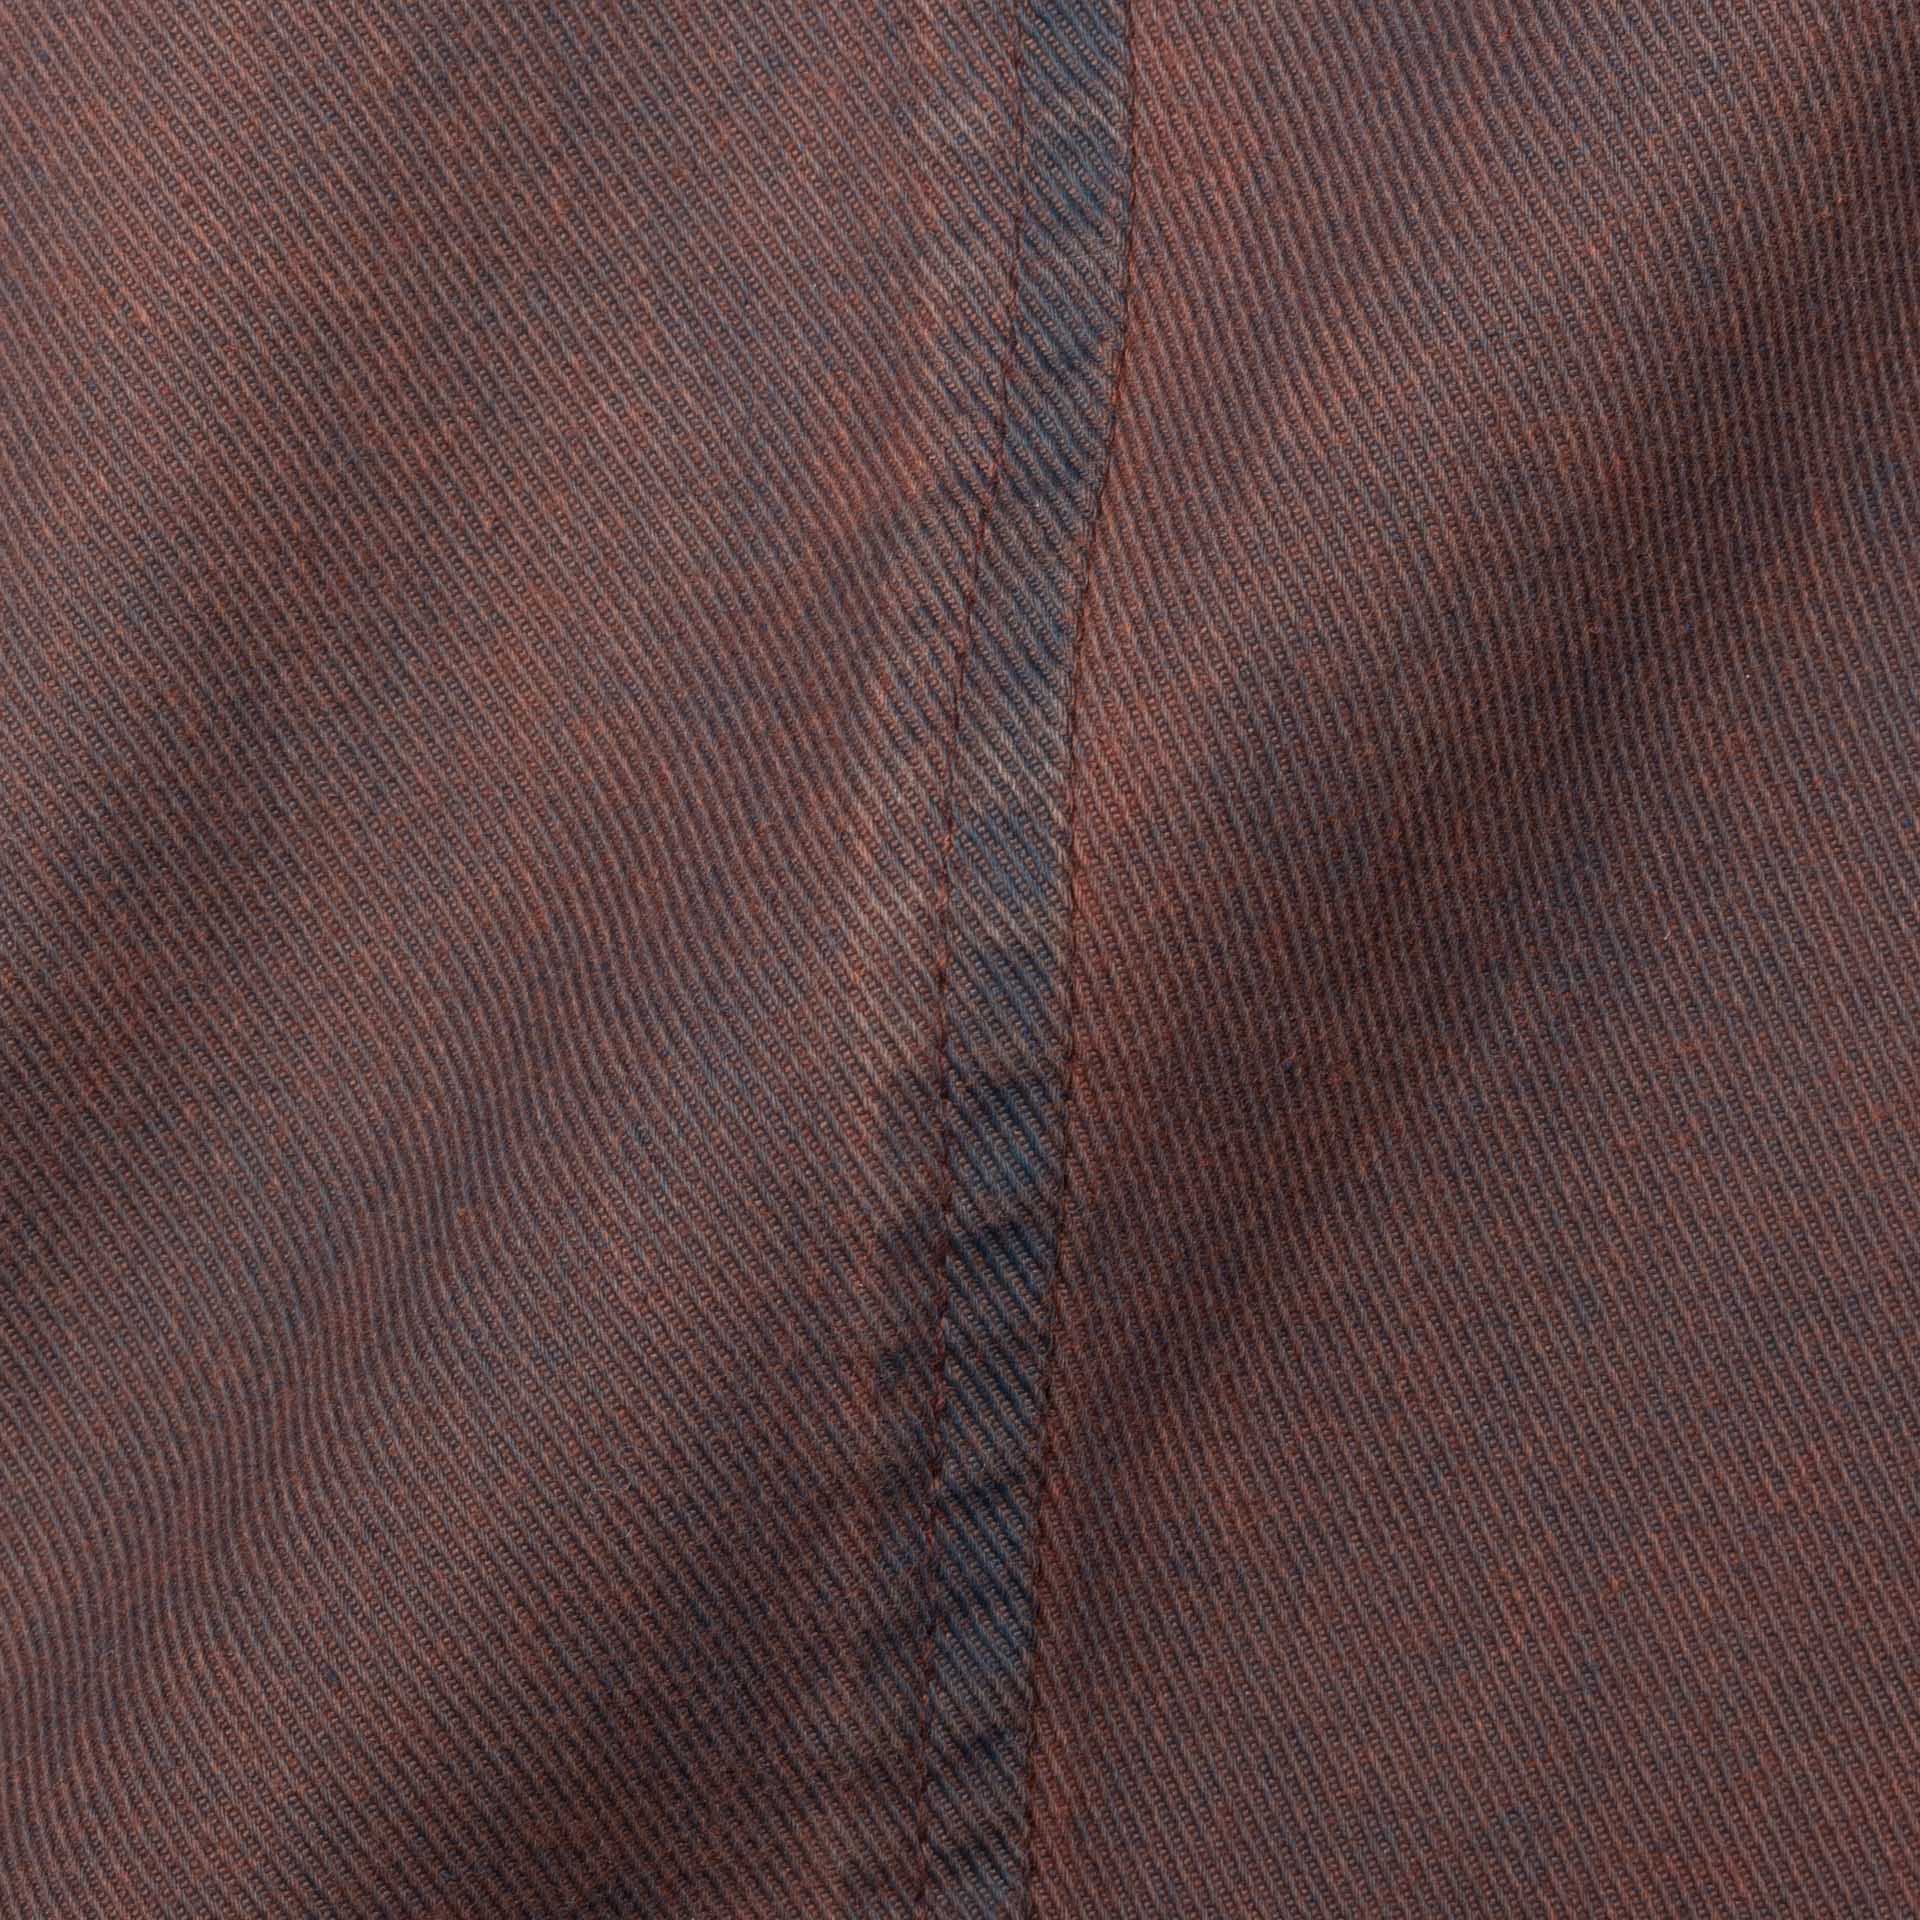 BOGLIOLI Galleria Garment Dyed Waxed Cotton 4 Button Jacket EU 50 NEW US 40 BOGLIOLI